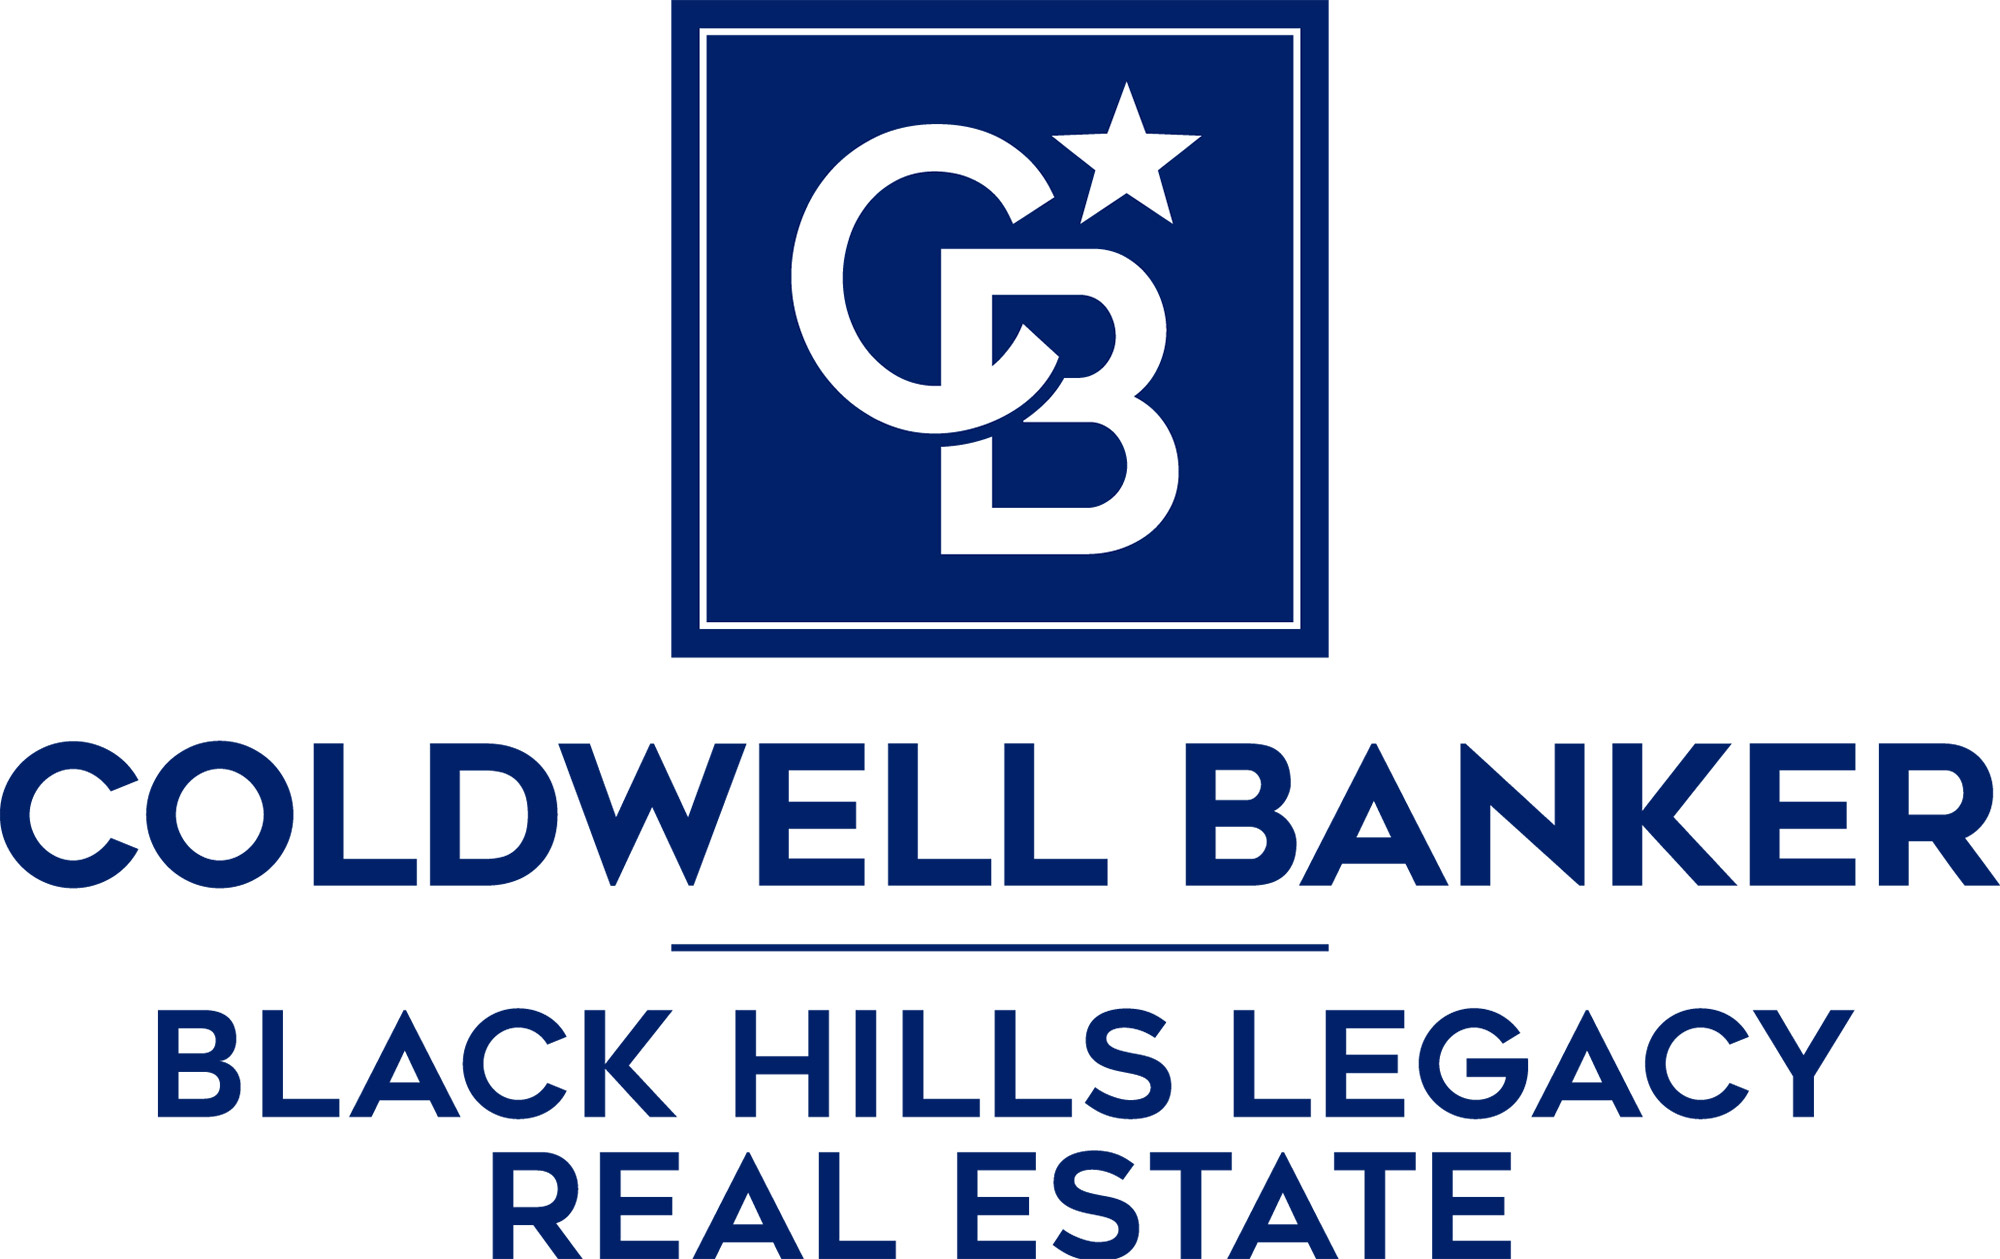 Rapid City and Black Hills Real Estate Market Report for December 2021